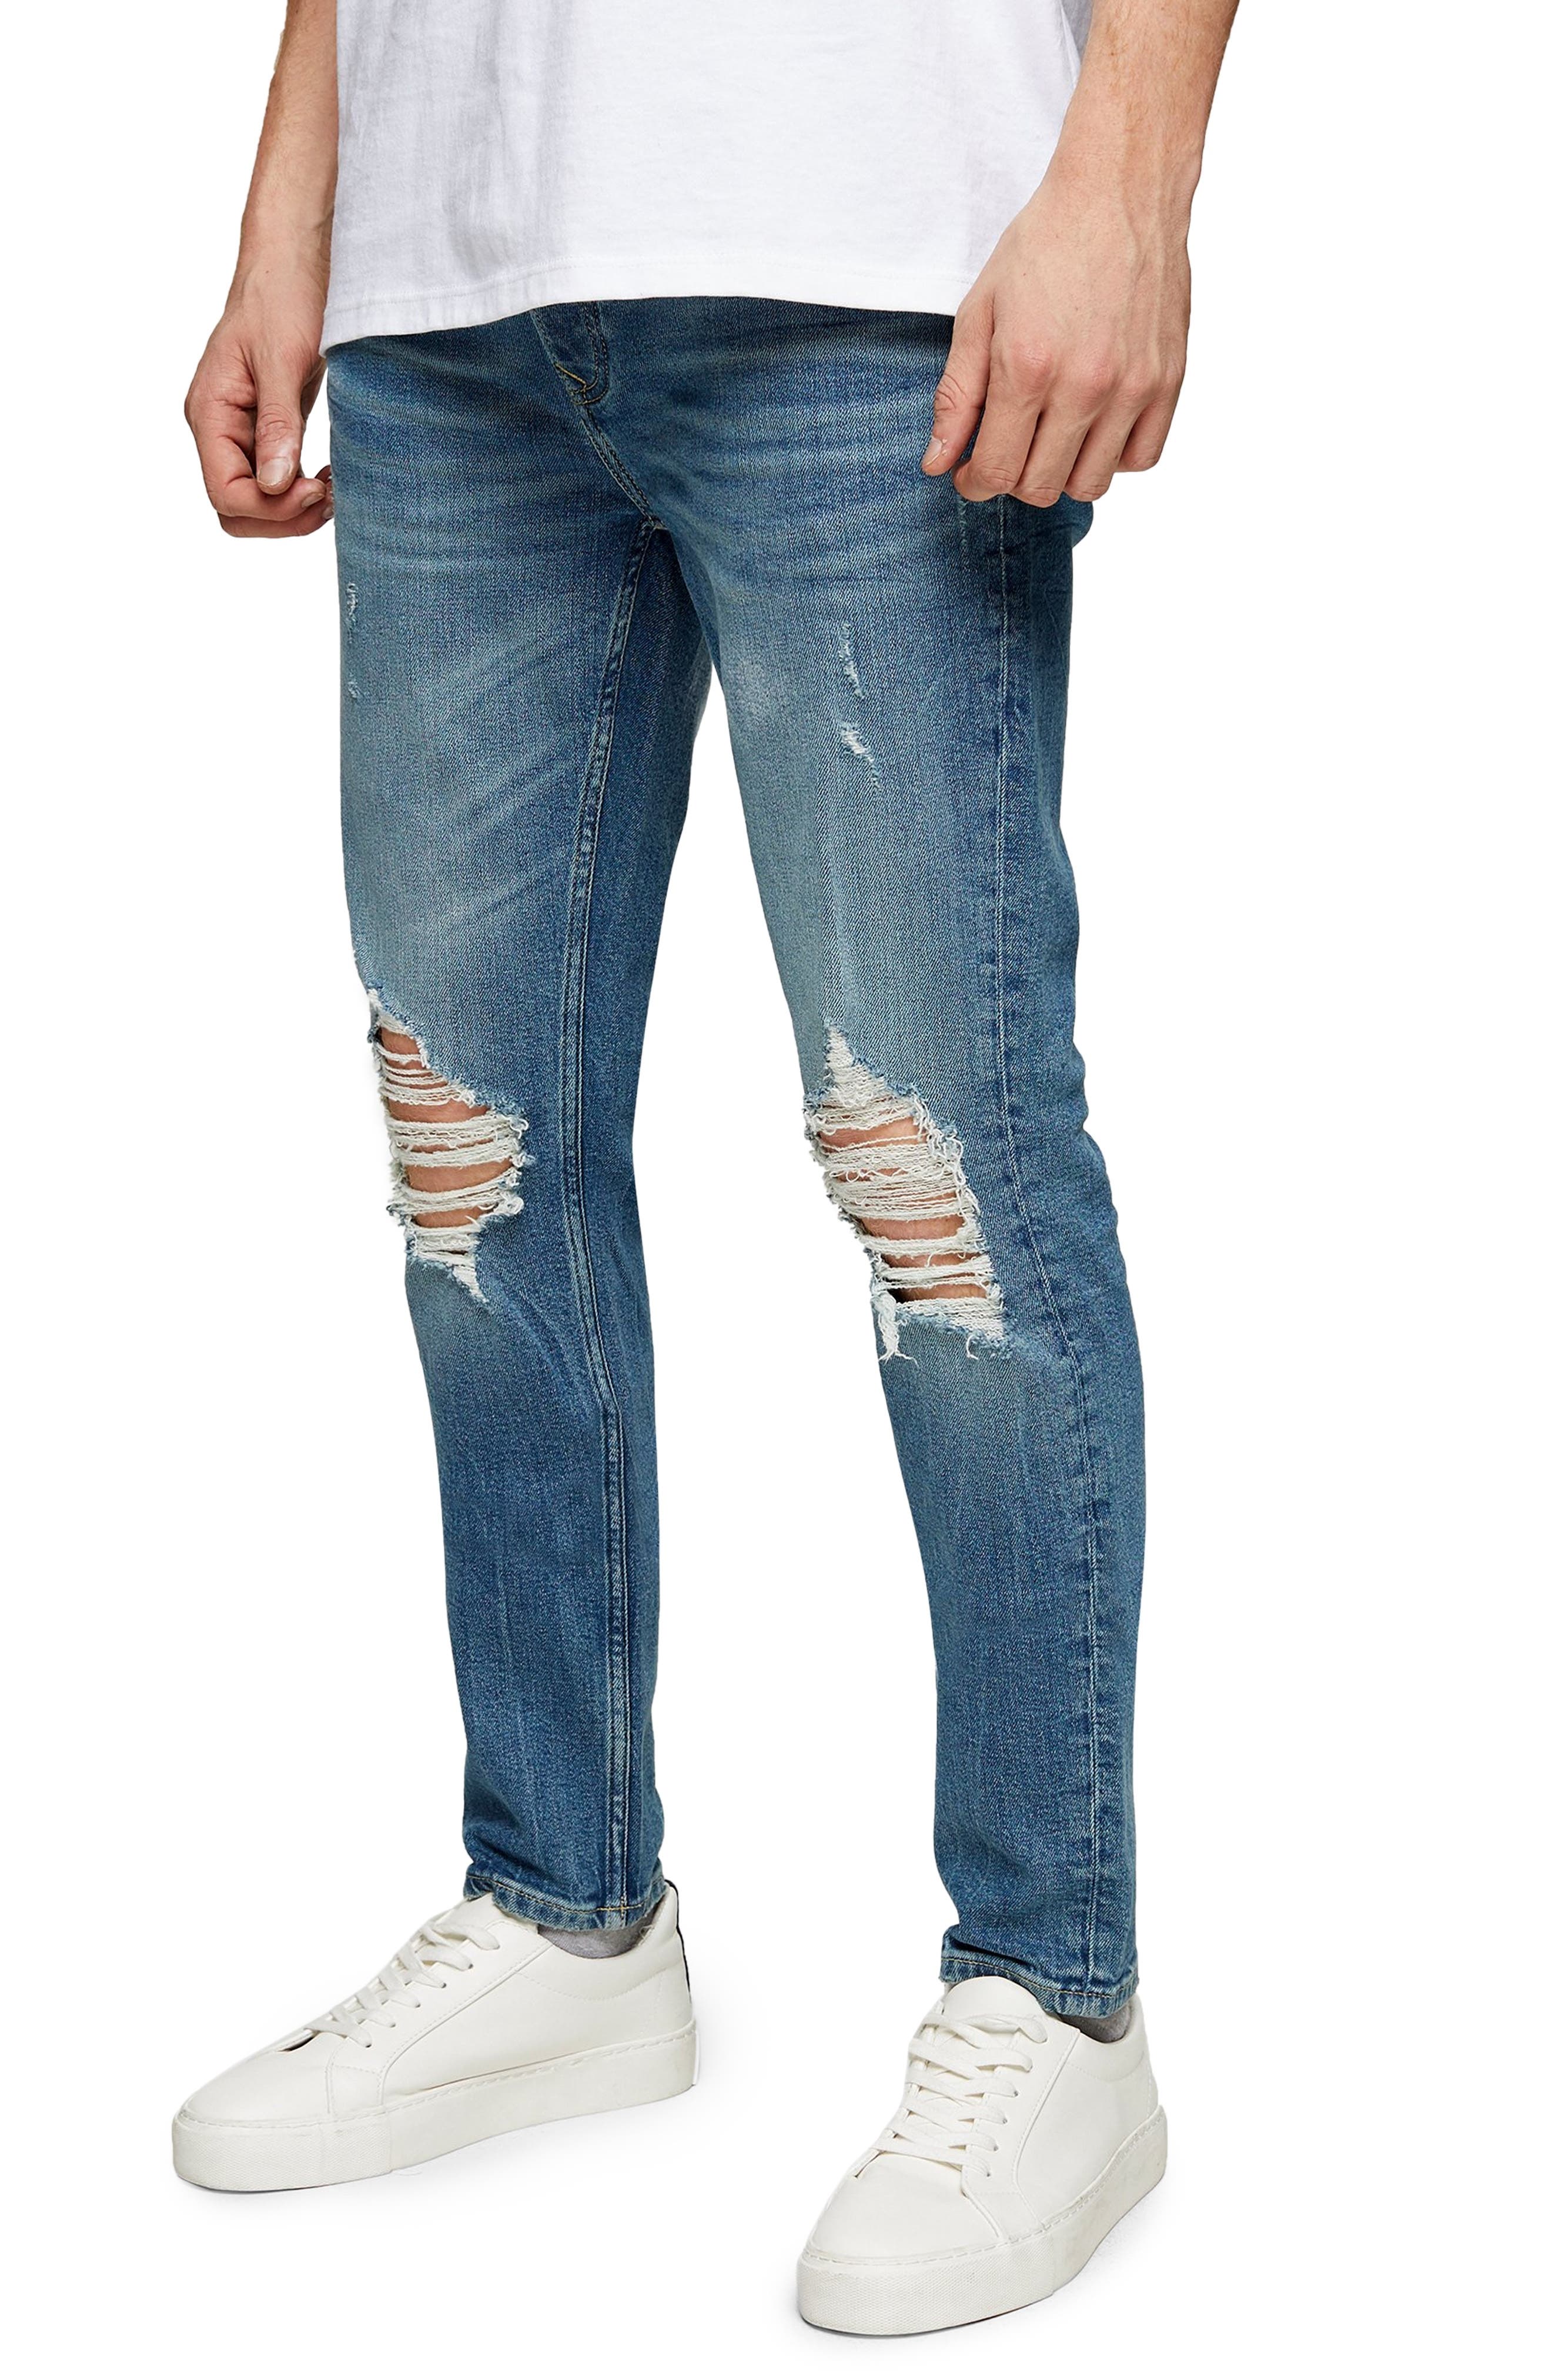 nordstrom boys jeans